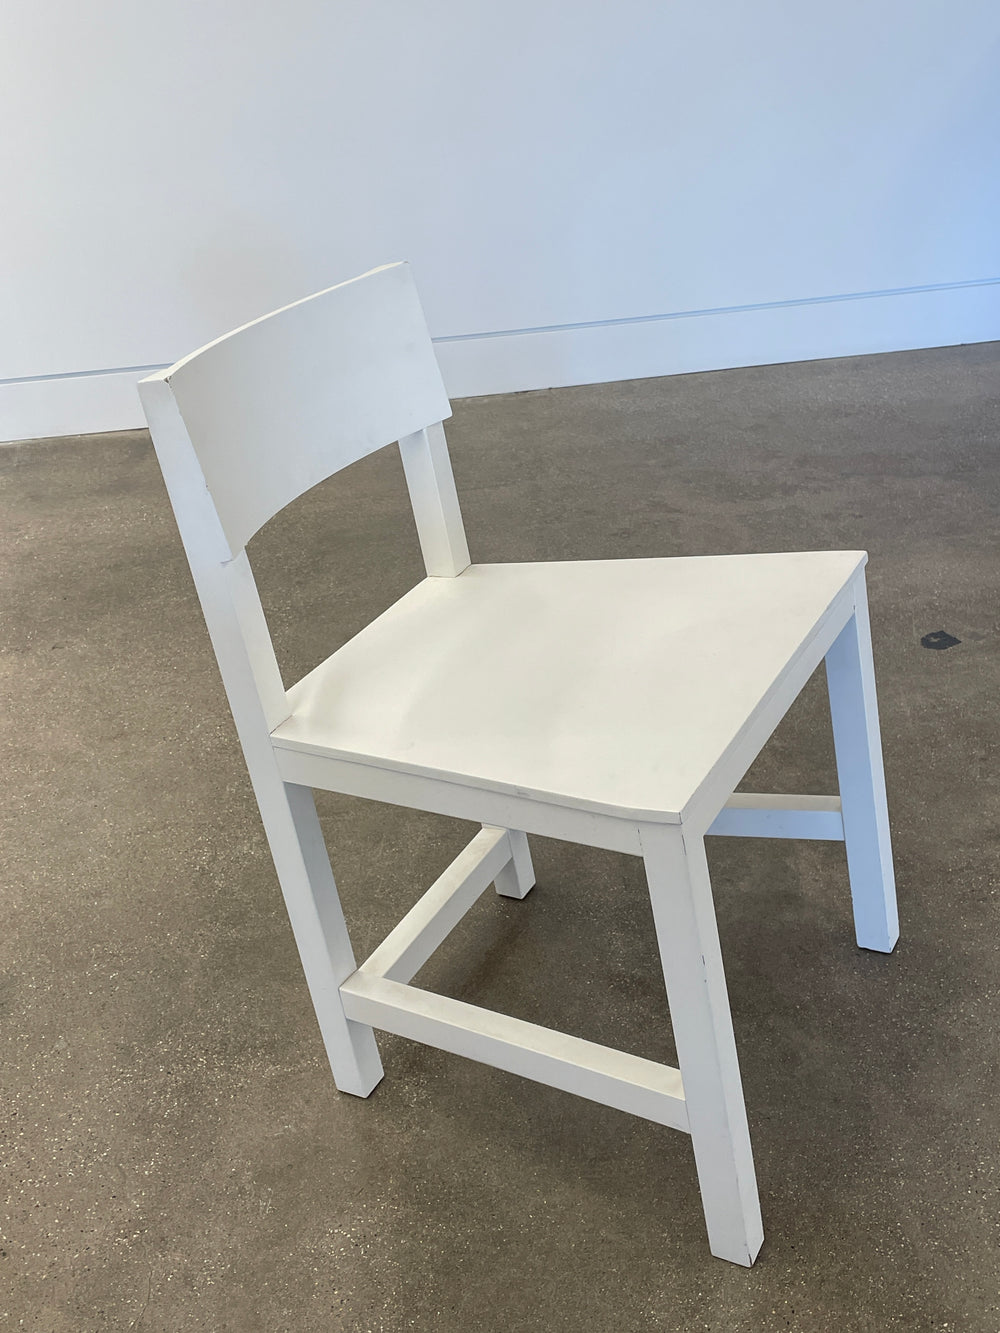 Atelier Van Lieshout “AVL” Shaker chair circa 1999